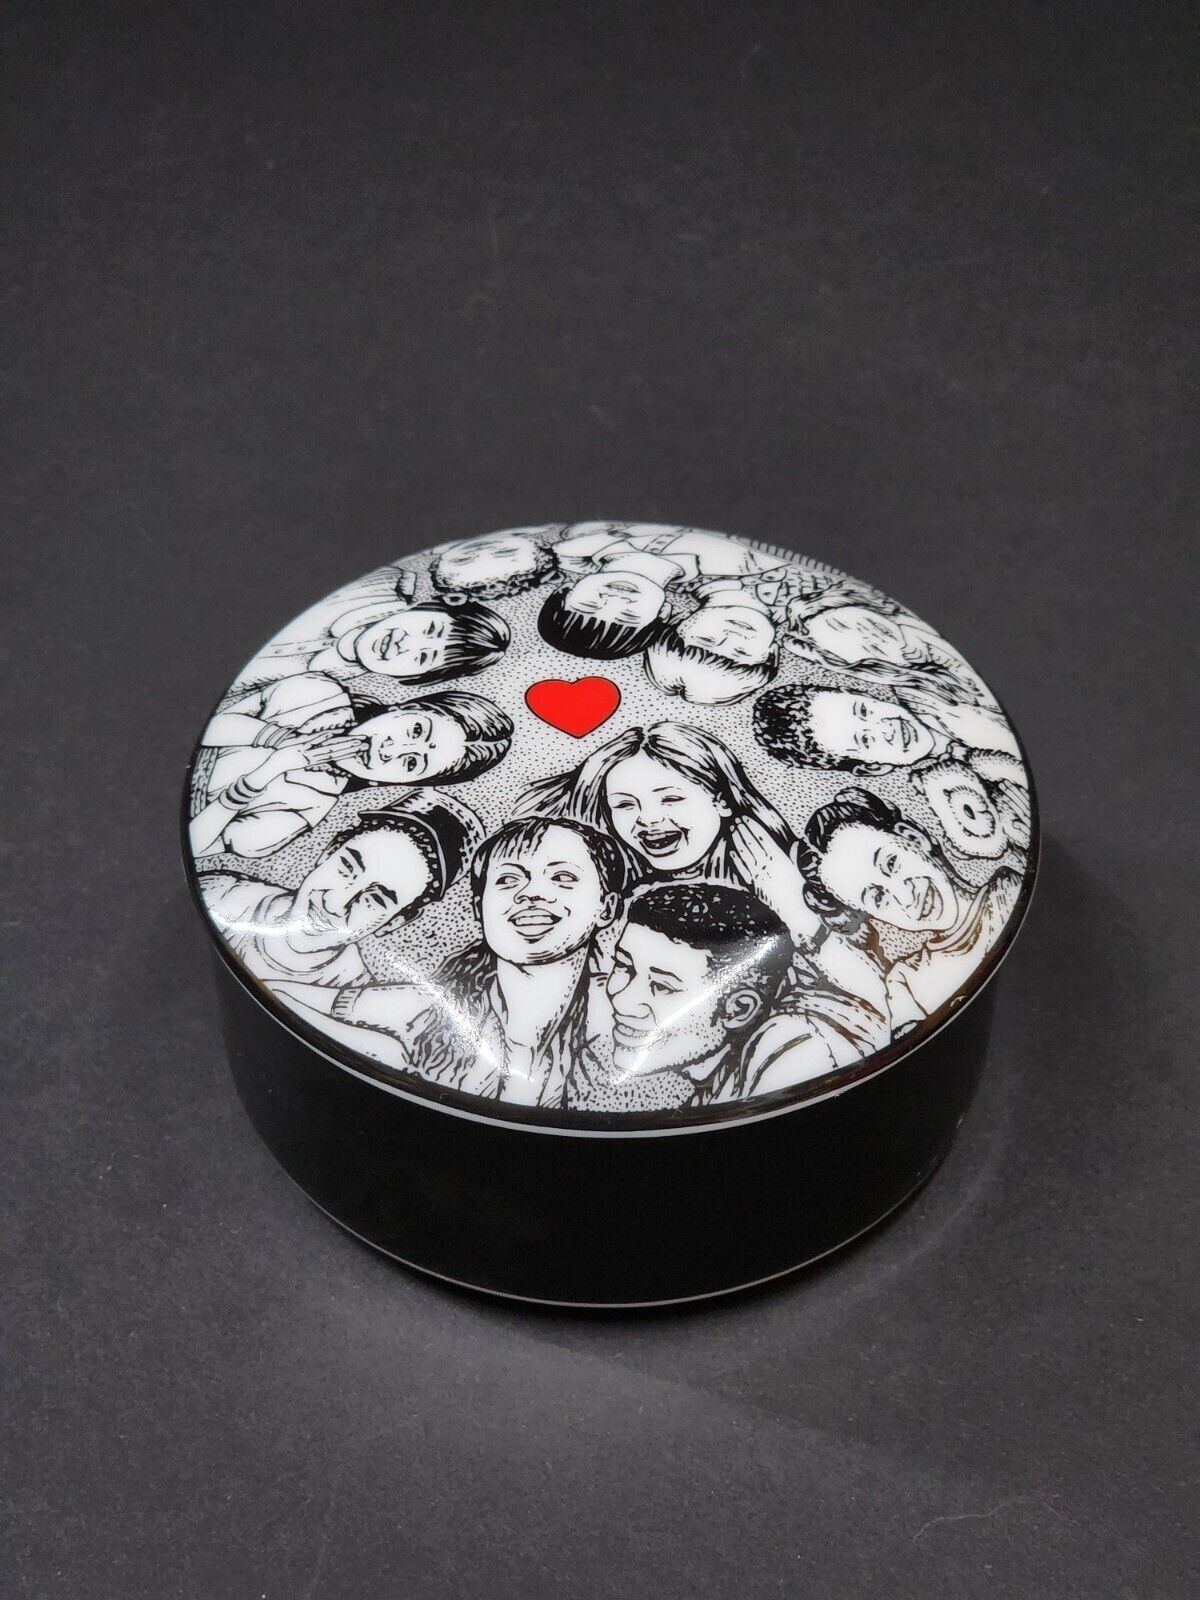 Tiffany&Co. Andre Agassi Trinket Box Black Heart Unity Charity Porcelain 4” 2003